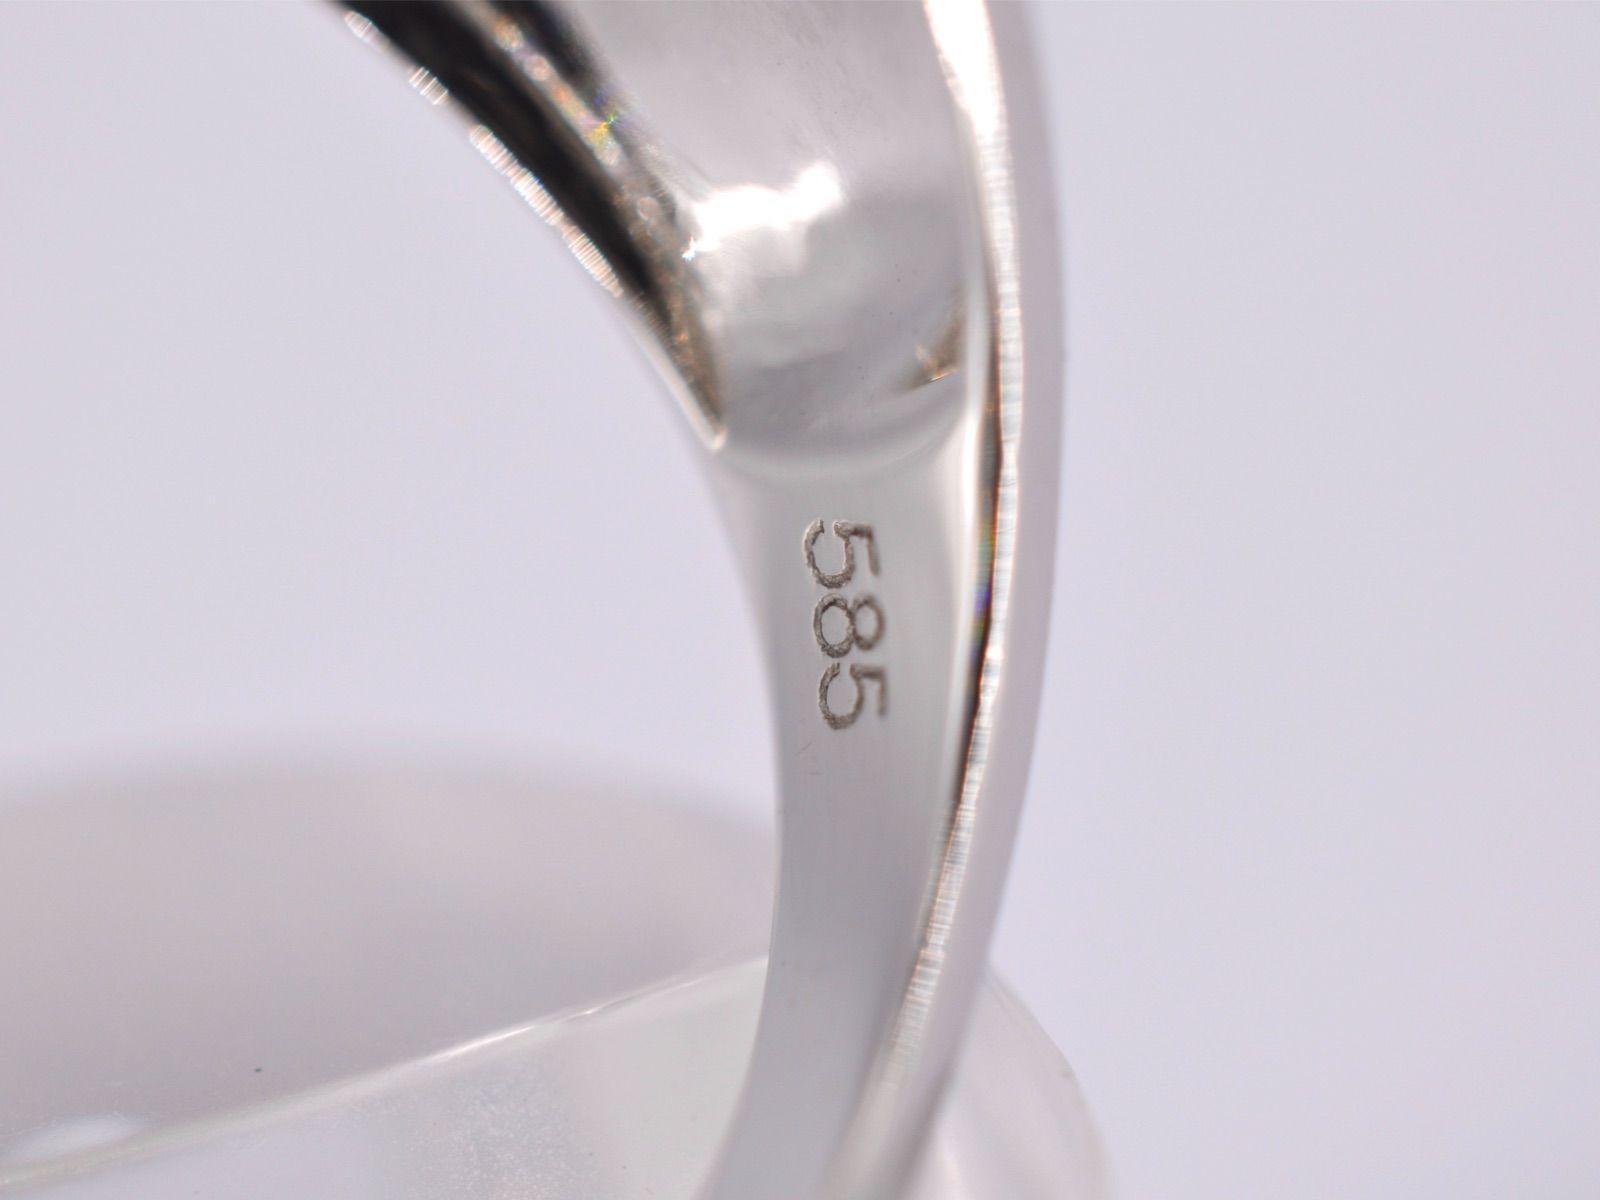 Women's White Gold Design Ring with Brilliant Diamonds For Sale